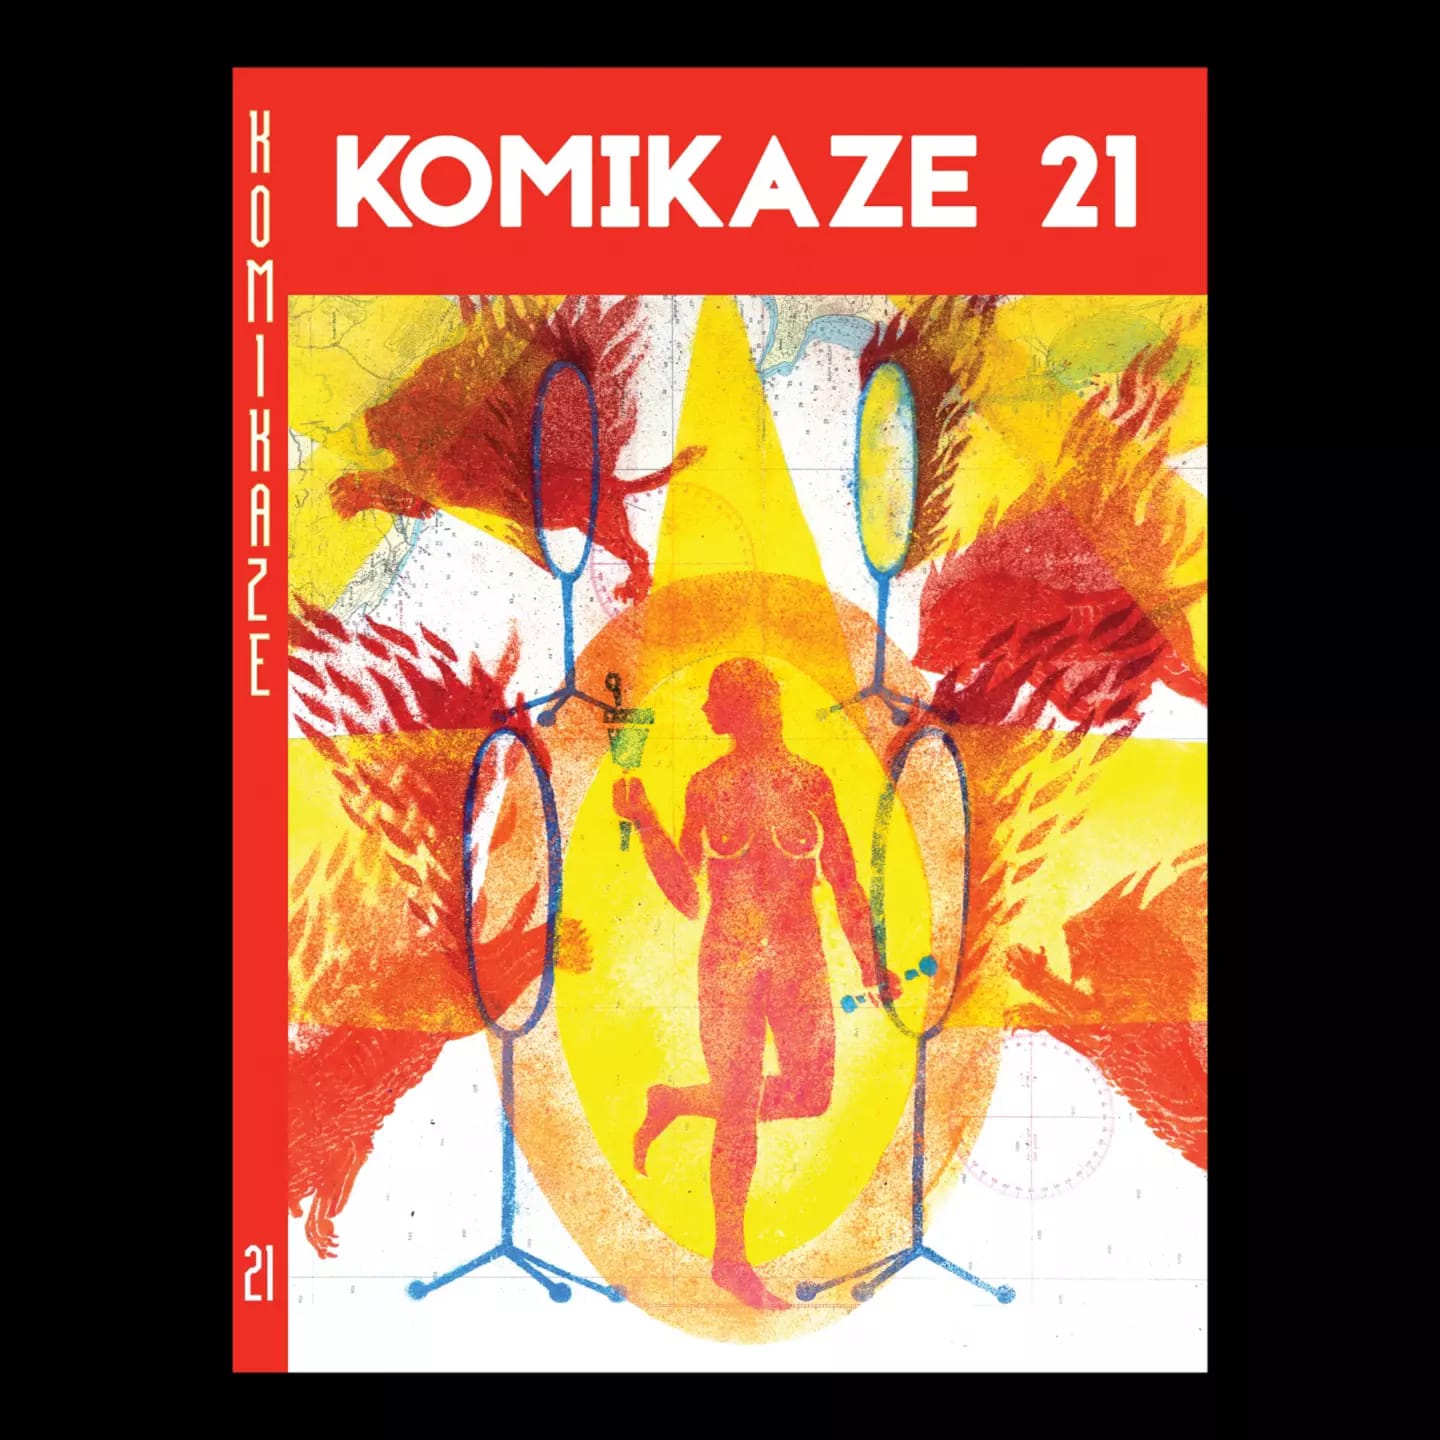 https://komikaze.hr/wp-content/uploads/2022/11/KOMIKAZE_letcikomikaze-21-1.jpg